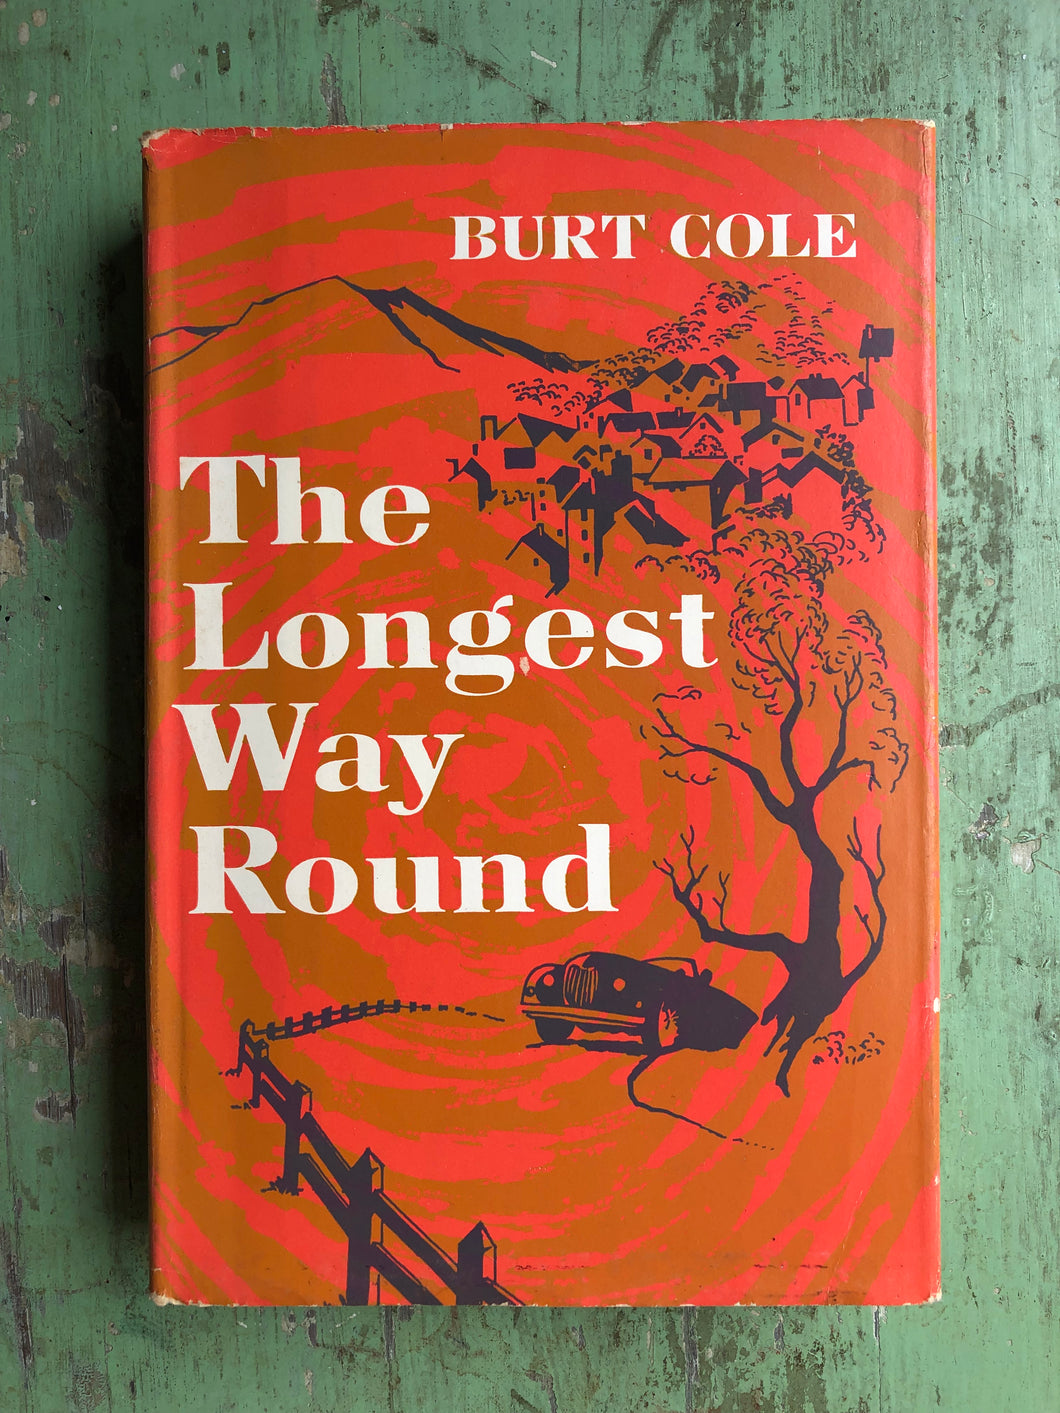 The Longest Way Round by Burt Cole